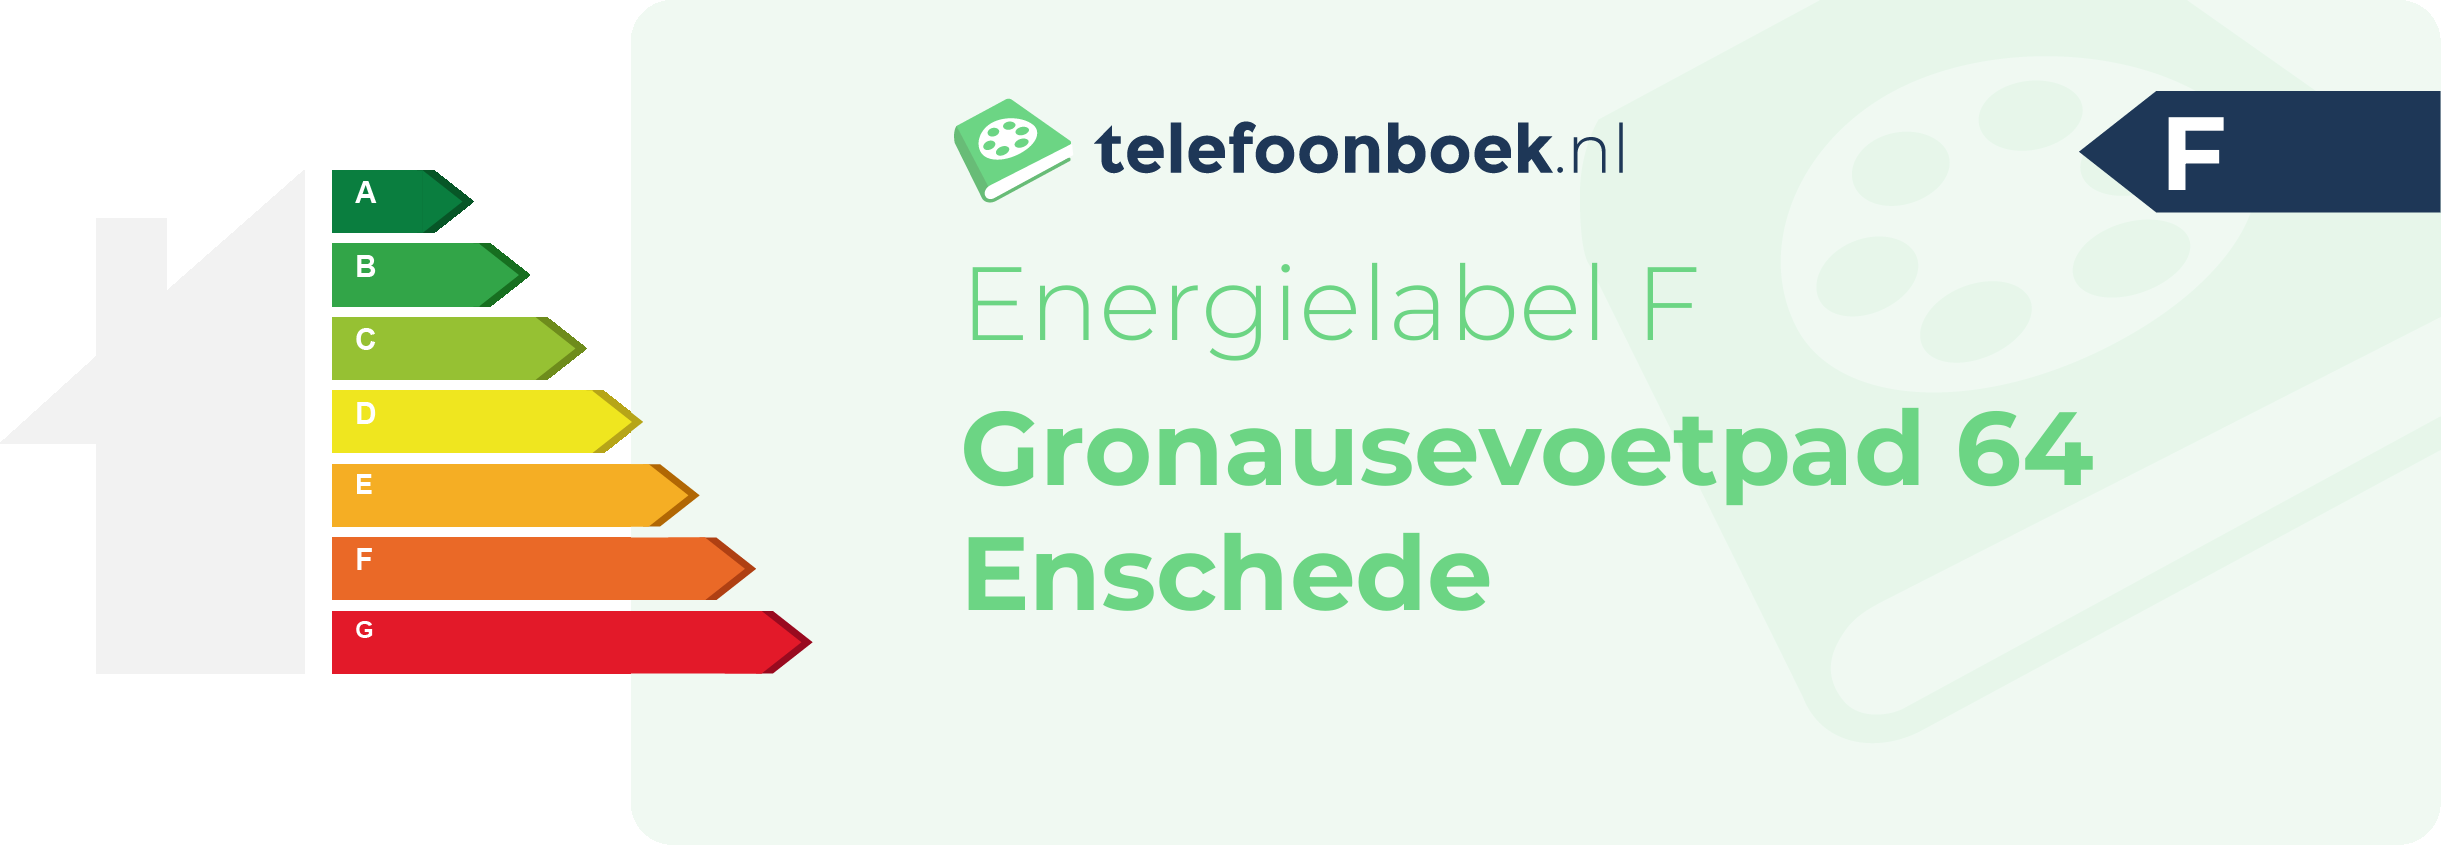 Energielabel Gronausevoetpad 64 Enschede